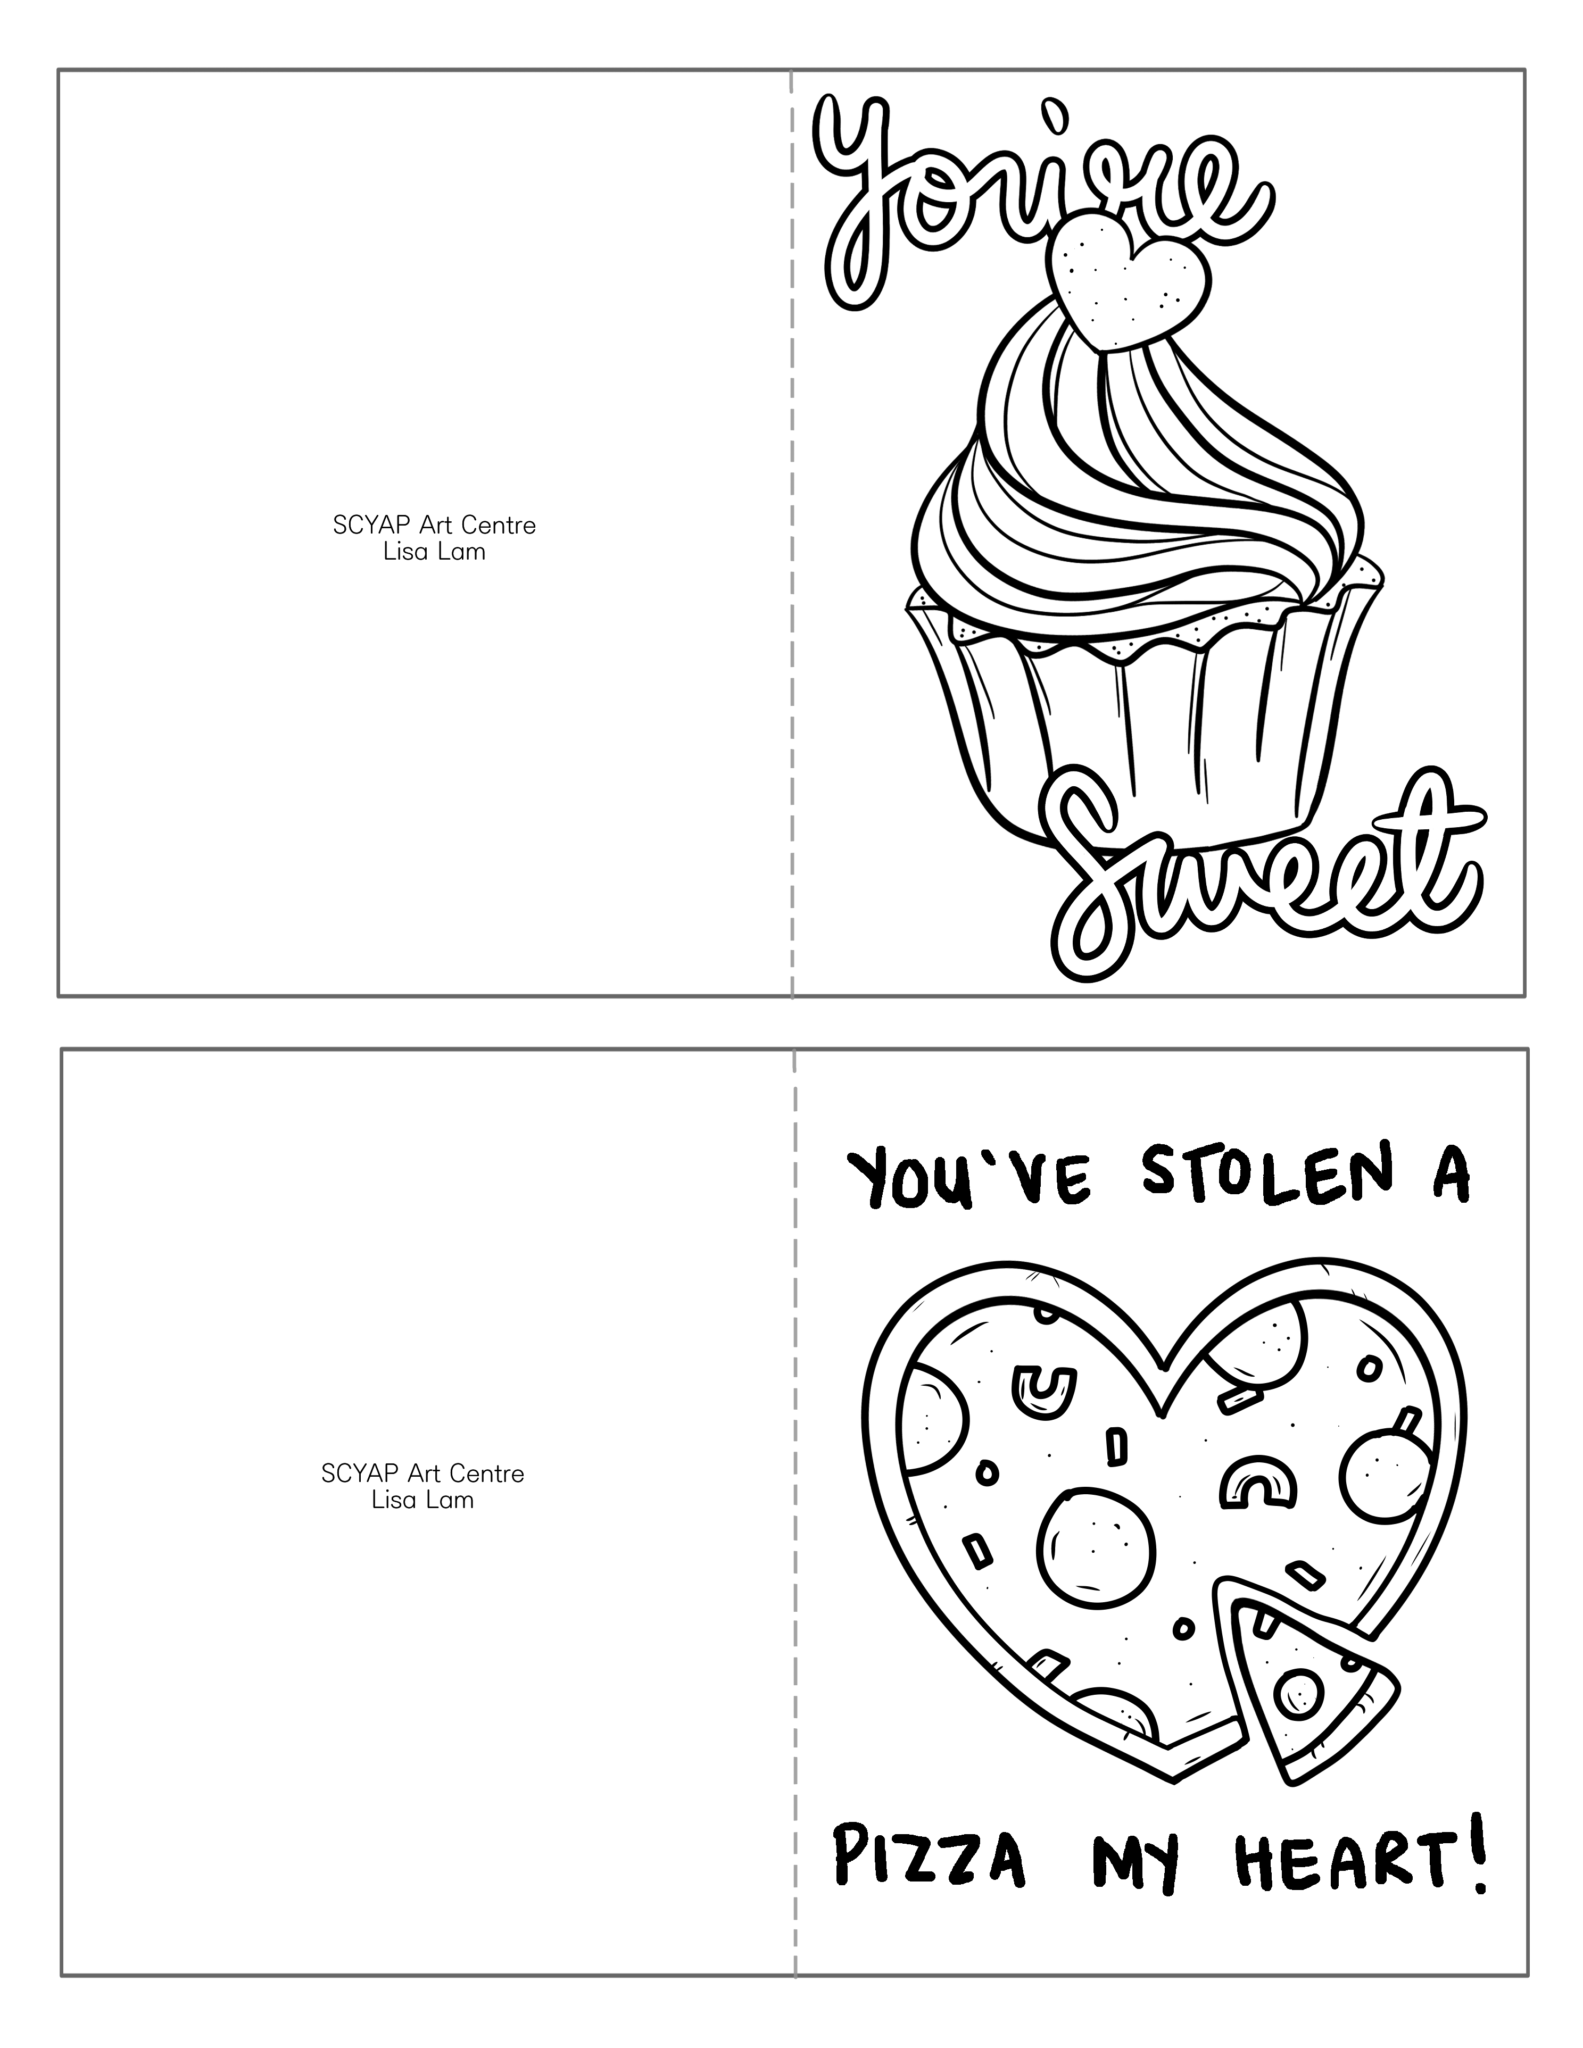 Print, Colour and Cut Valentine Cards SCYAP